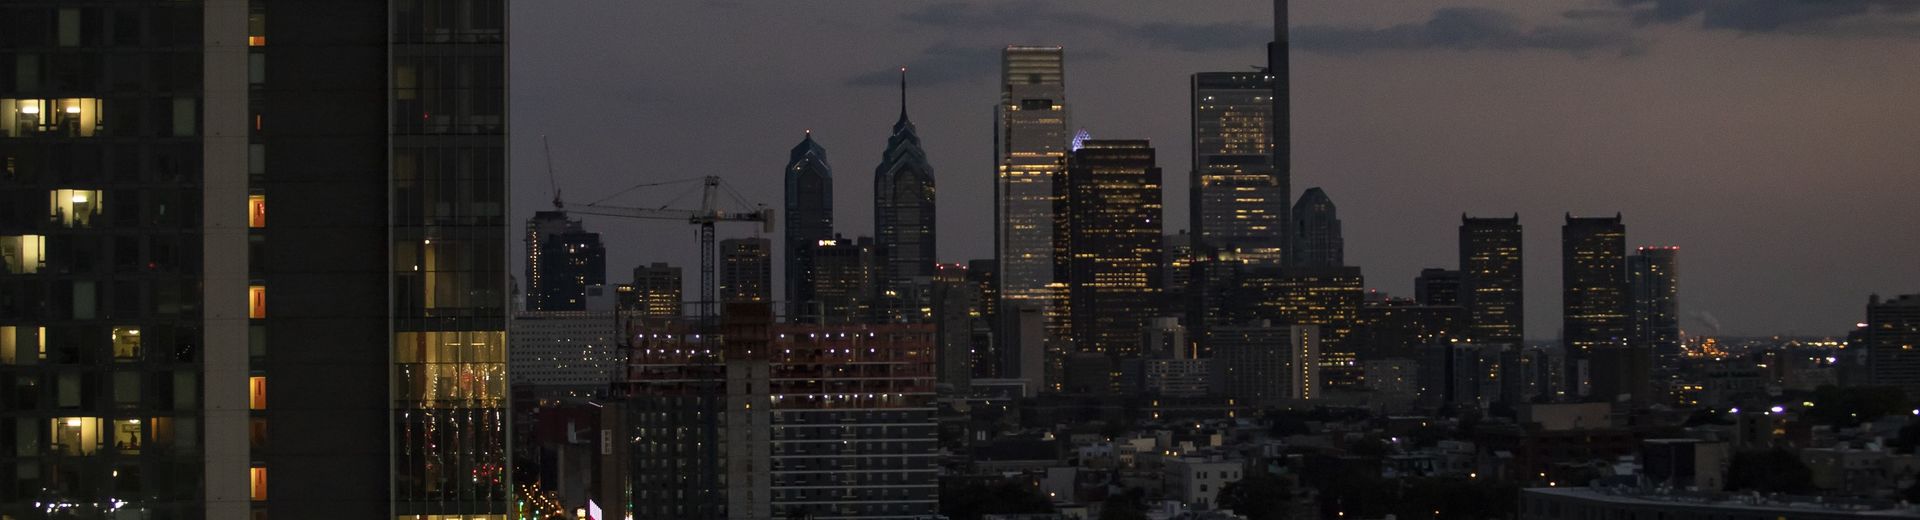 The downtown Philadelphia skyline at dusk.